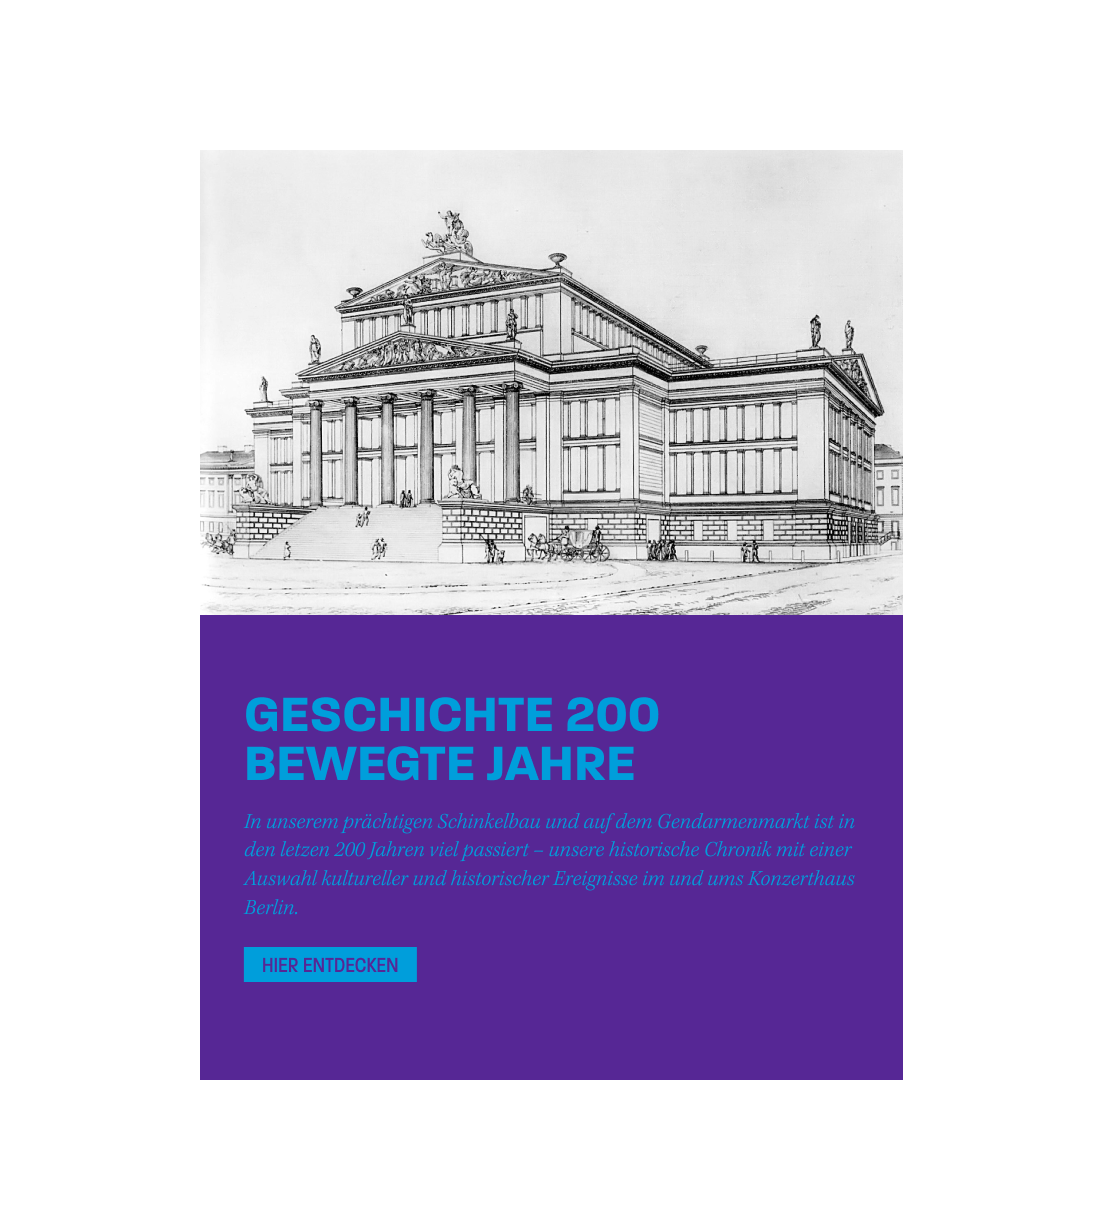 Konzerthaus Berlin – 200 Jahre Geschichte Teaser | MIR MEDIA - Digital Agentur | Django, Django Framework, User Centered Design, Design, User-Experience Workshop, Responsive, CMS, Personas-Modellierung, Mobile-First, Relaunch, Redesign